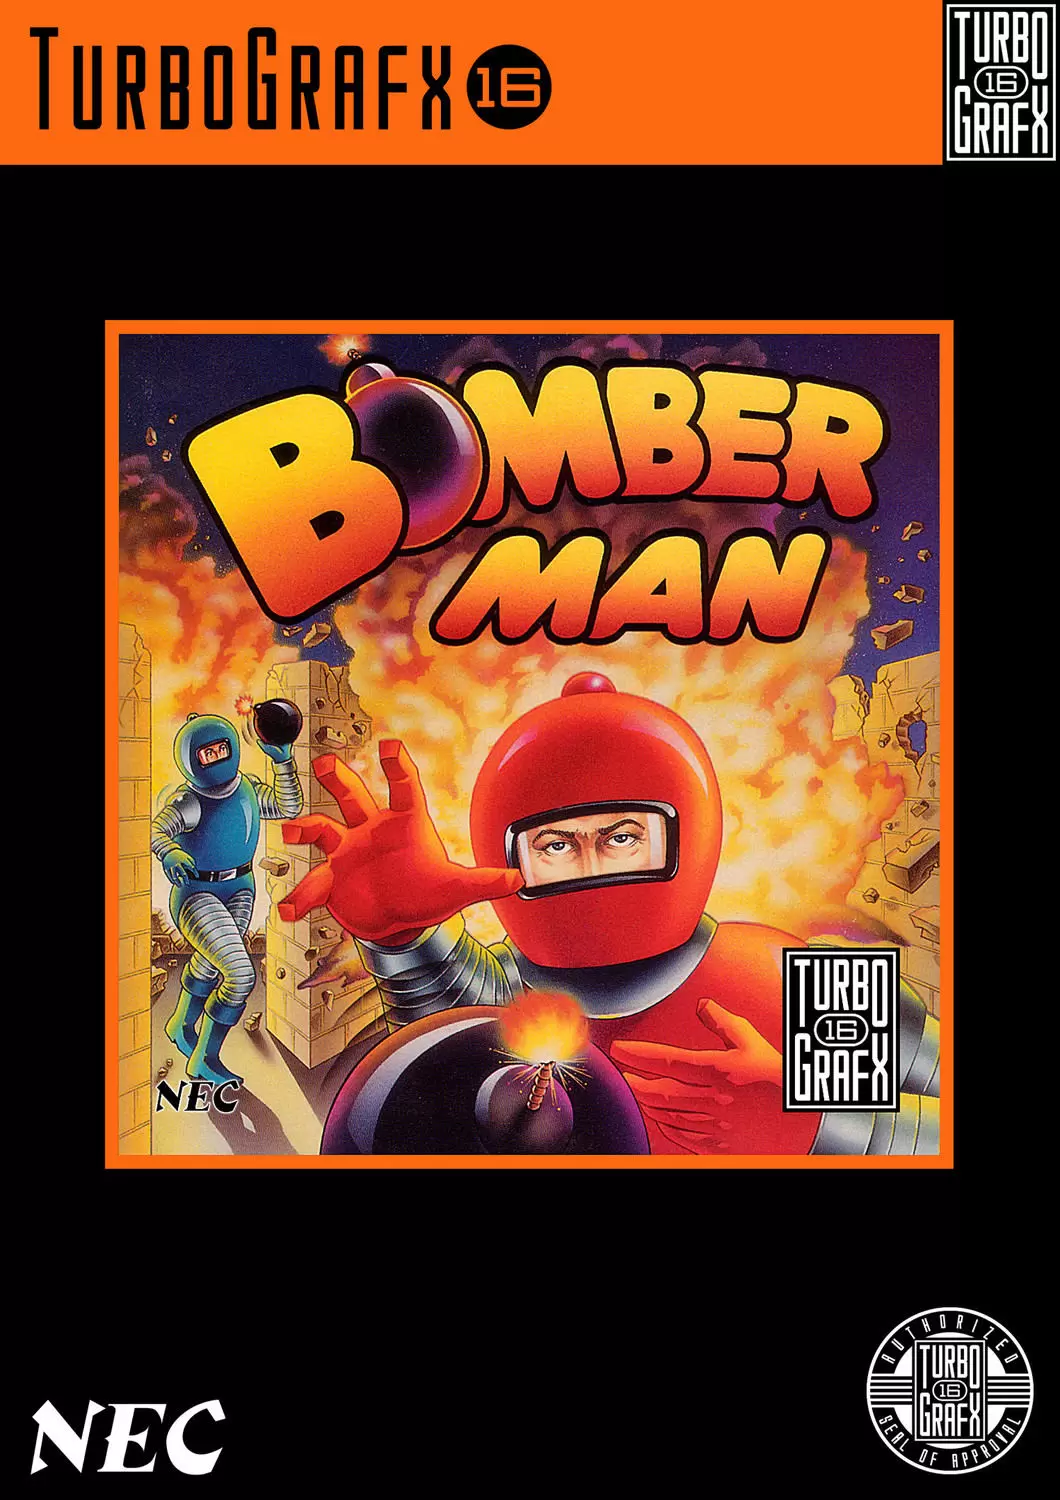 Turbo Grafx 16 (PC Engine) - Bomberman